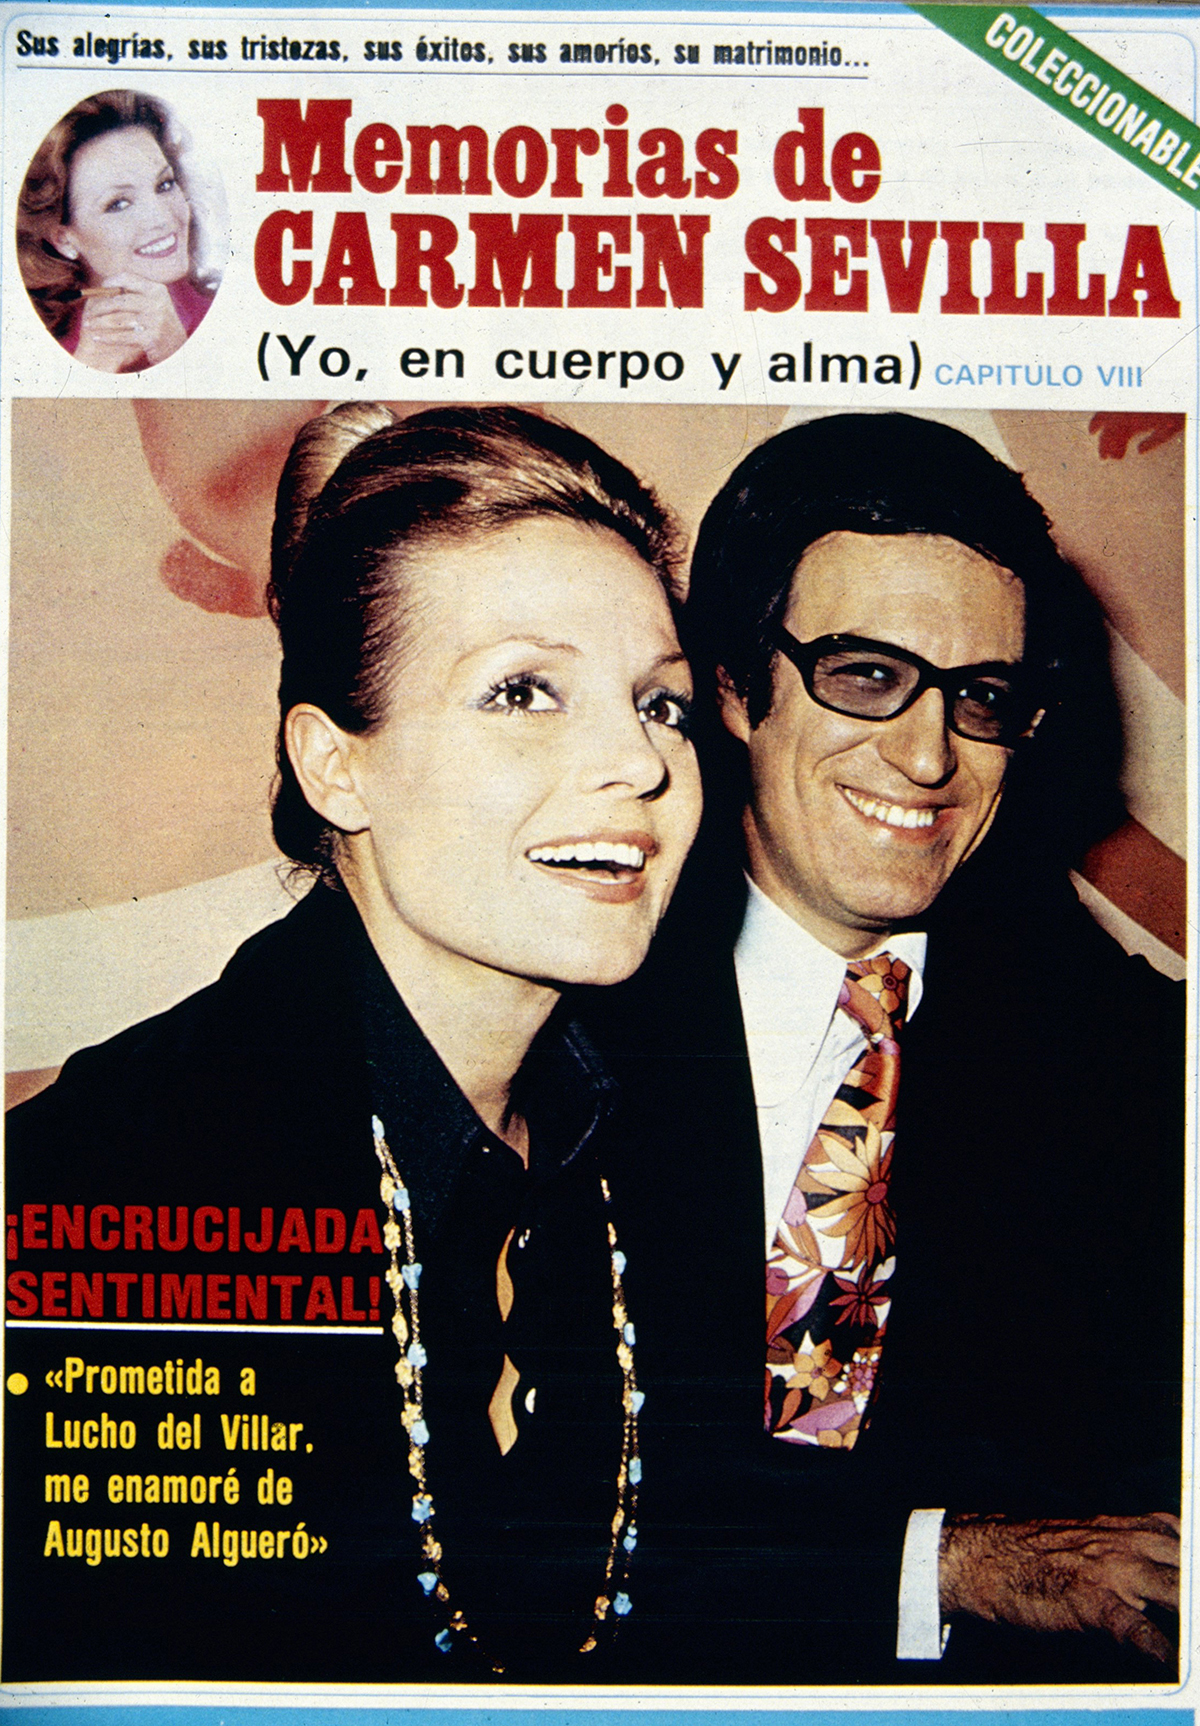 Carmen Sevilla, prometida con Lucho del Villar